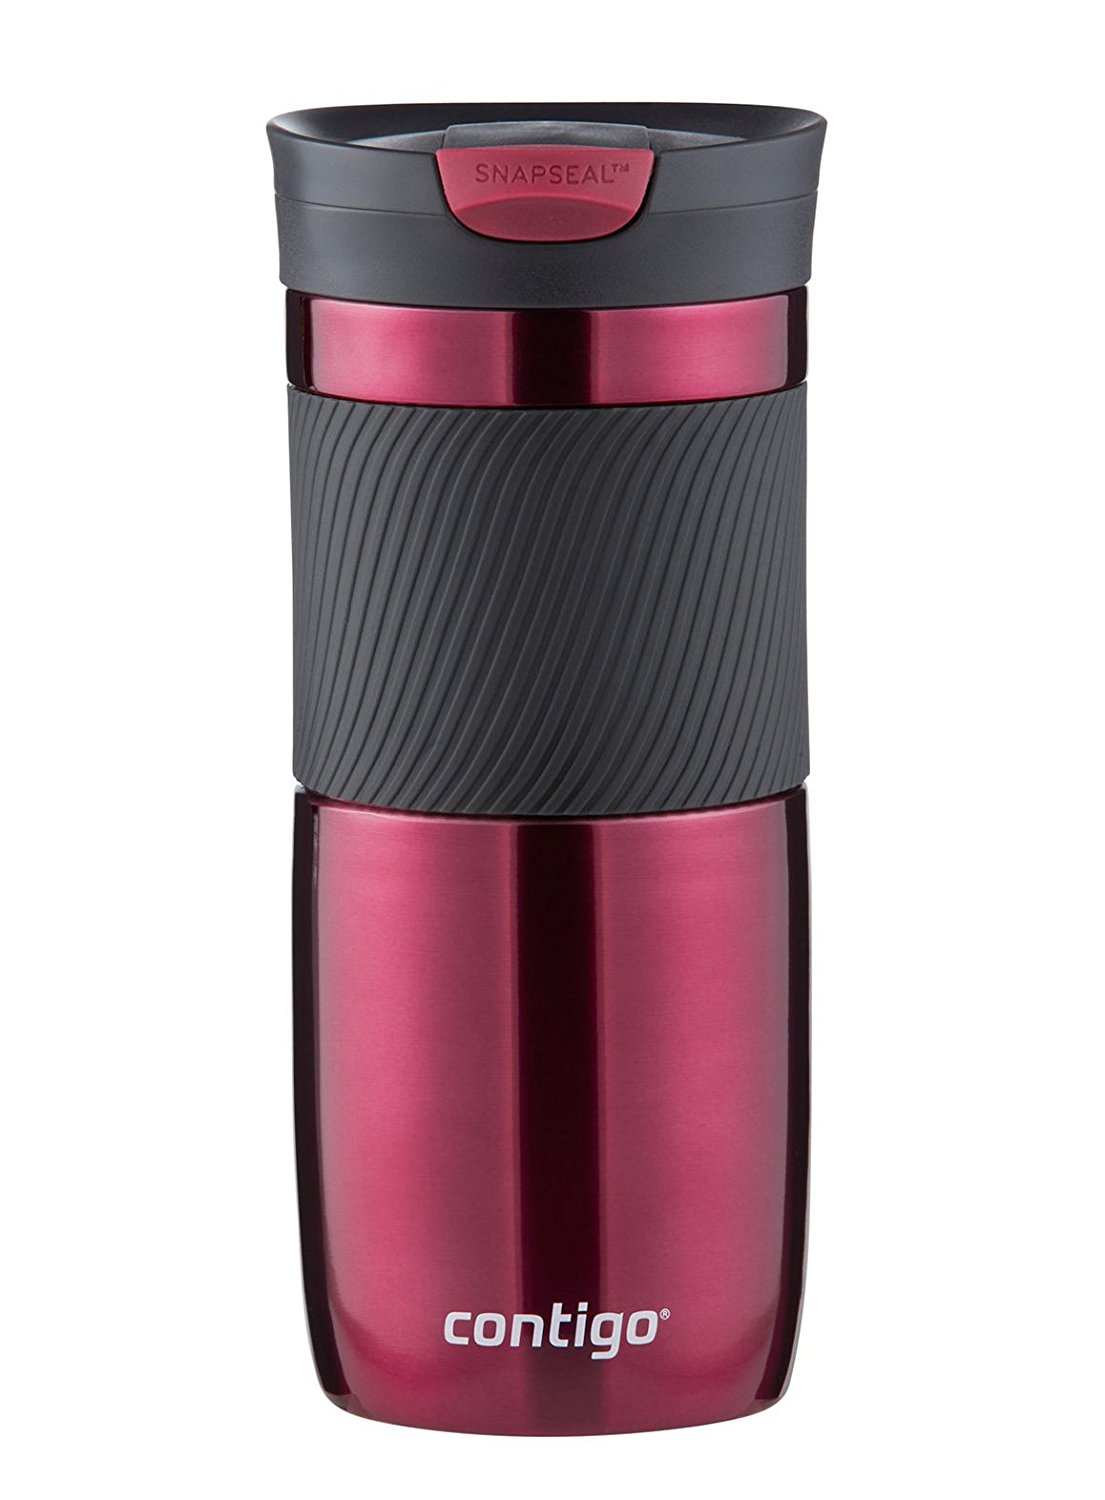 Contigo SnapSeal Vacuum-Insulated Stainless Steel Travel Mug, 16-Ounce – Just $8.99!